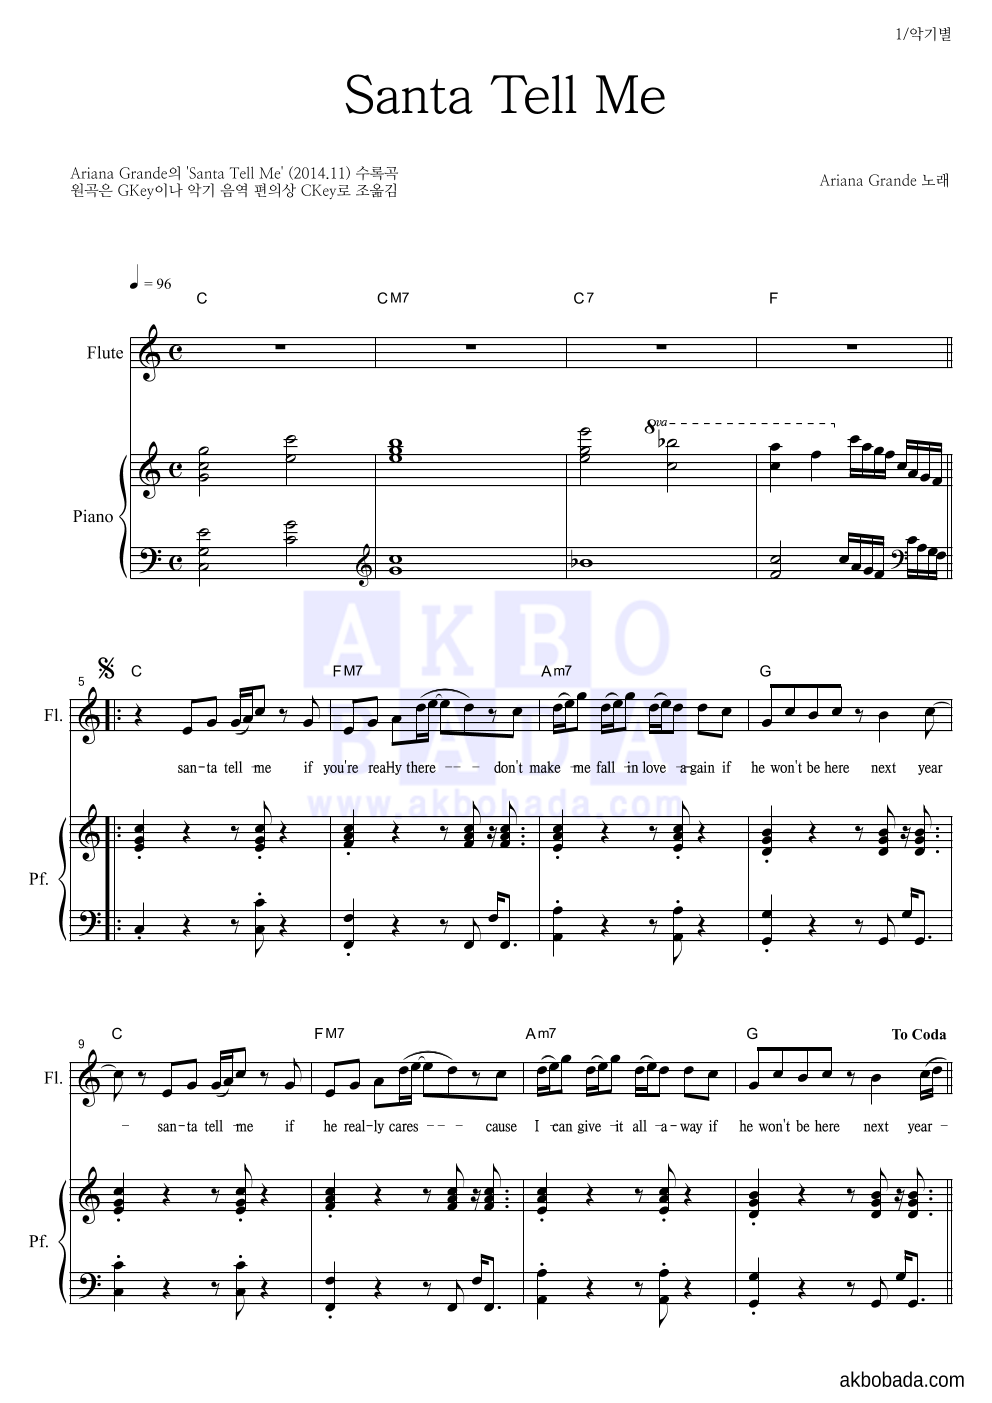 Ariana Grande - Santa Tell Me 플룻&피아노 악보 